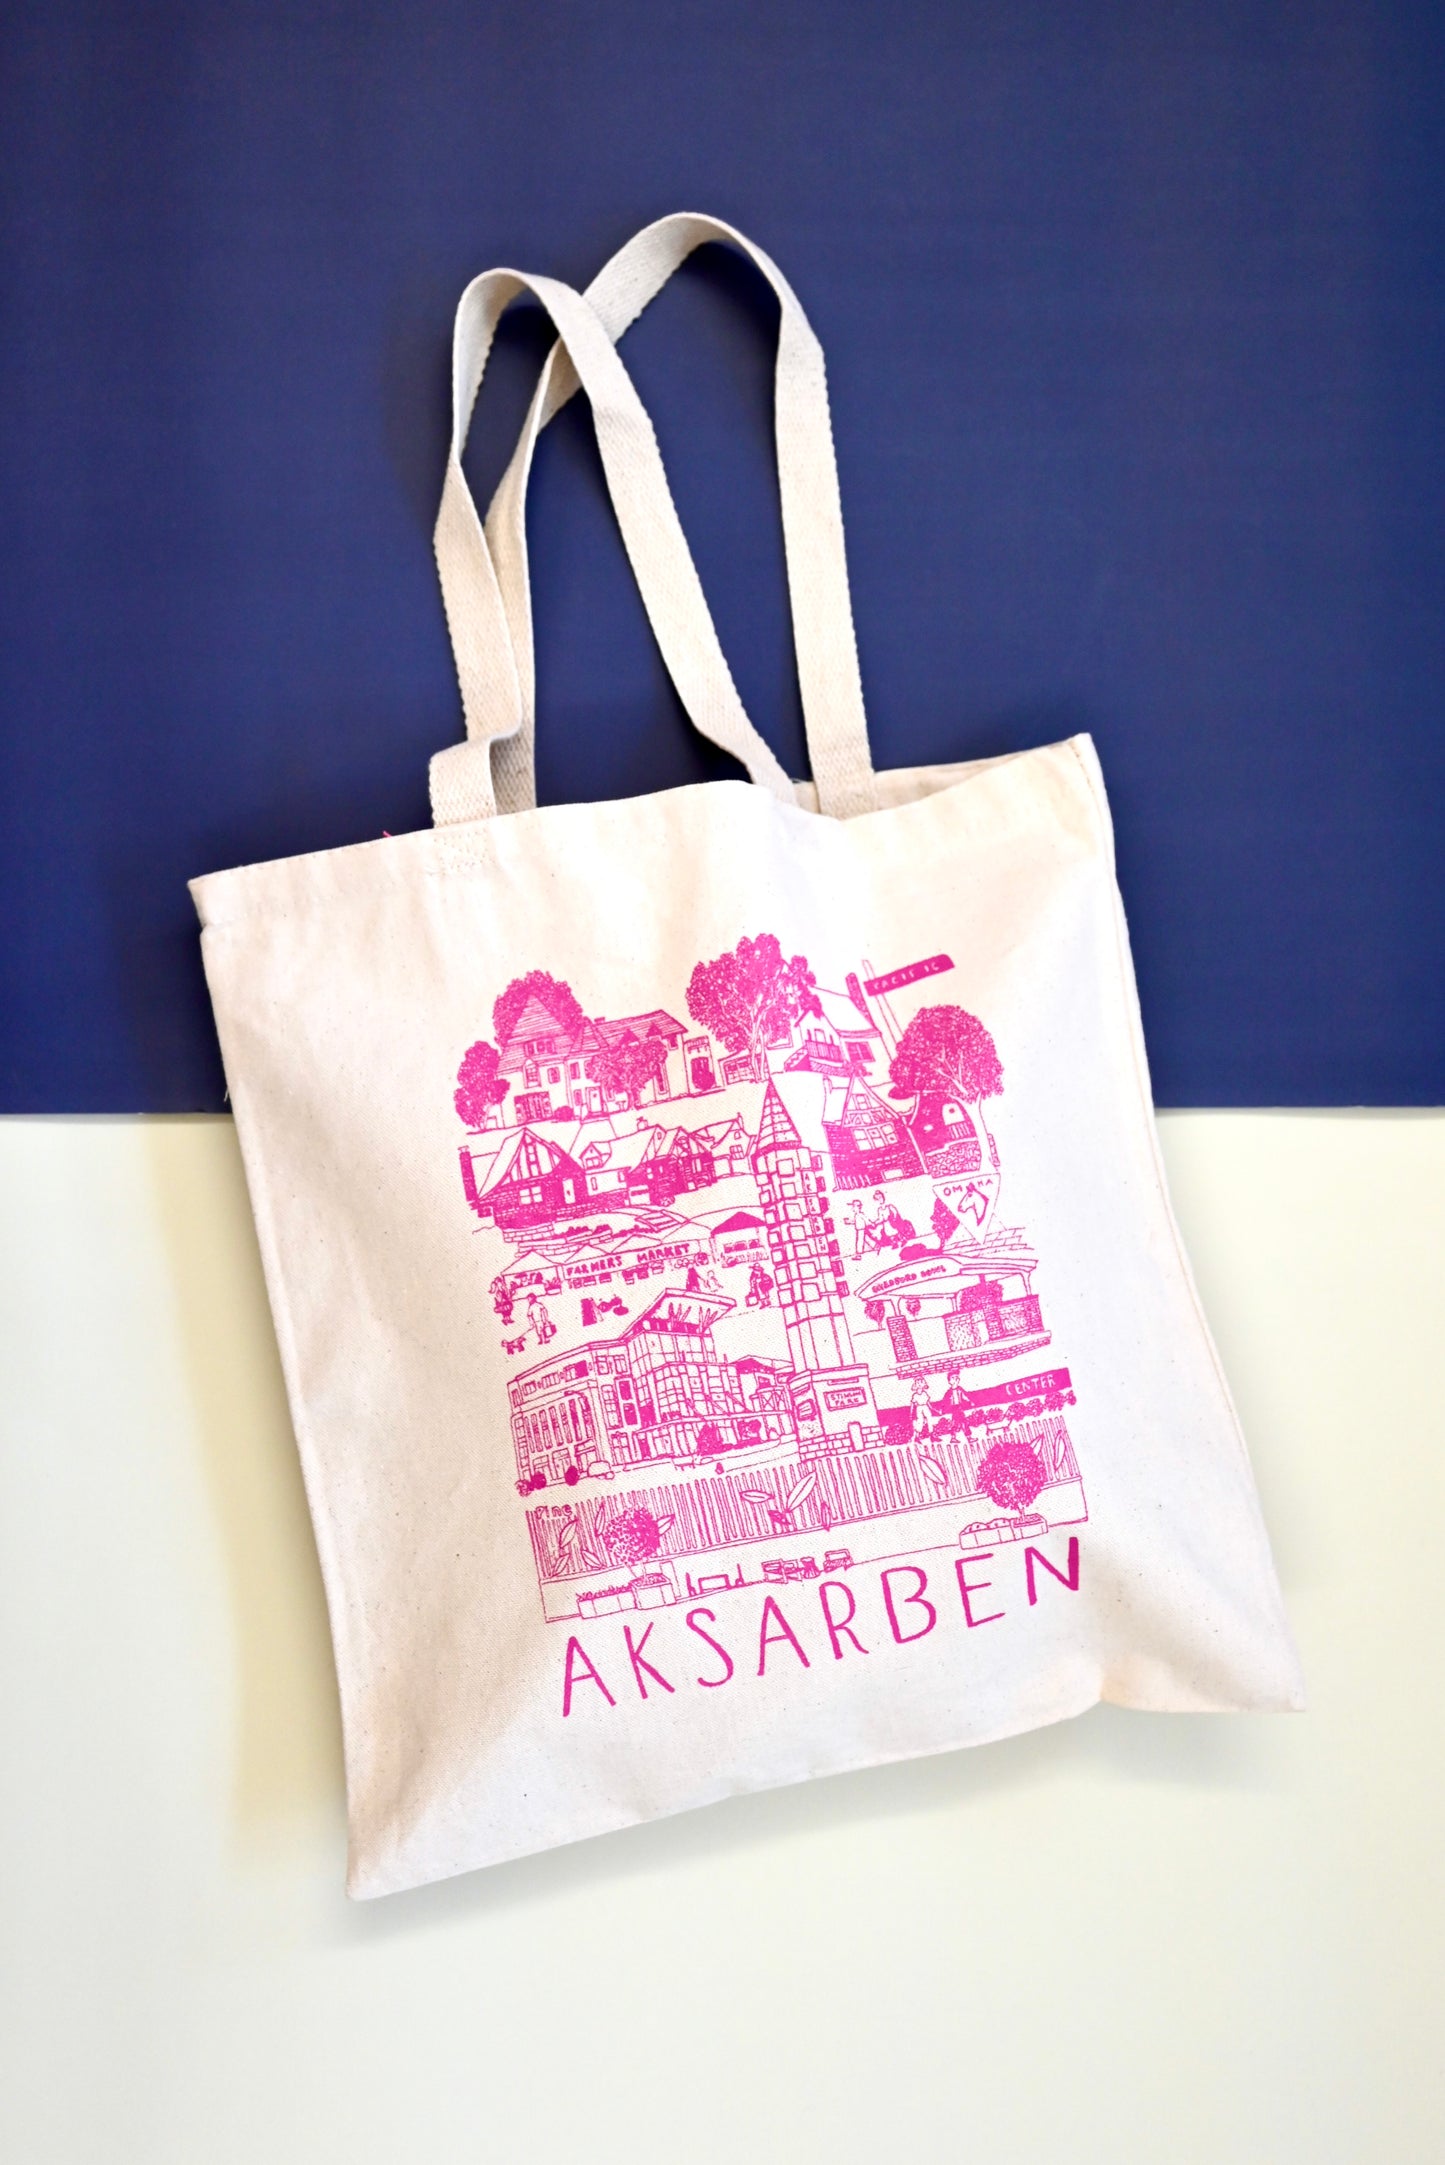 Aksarben Tote Bag